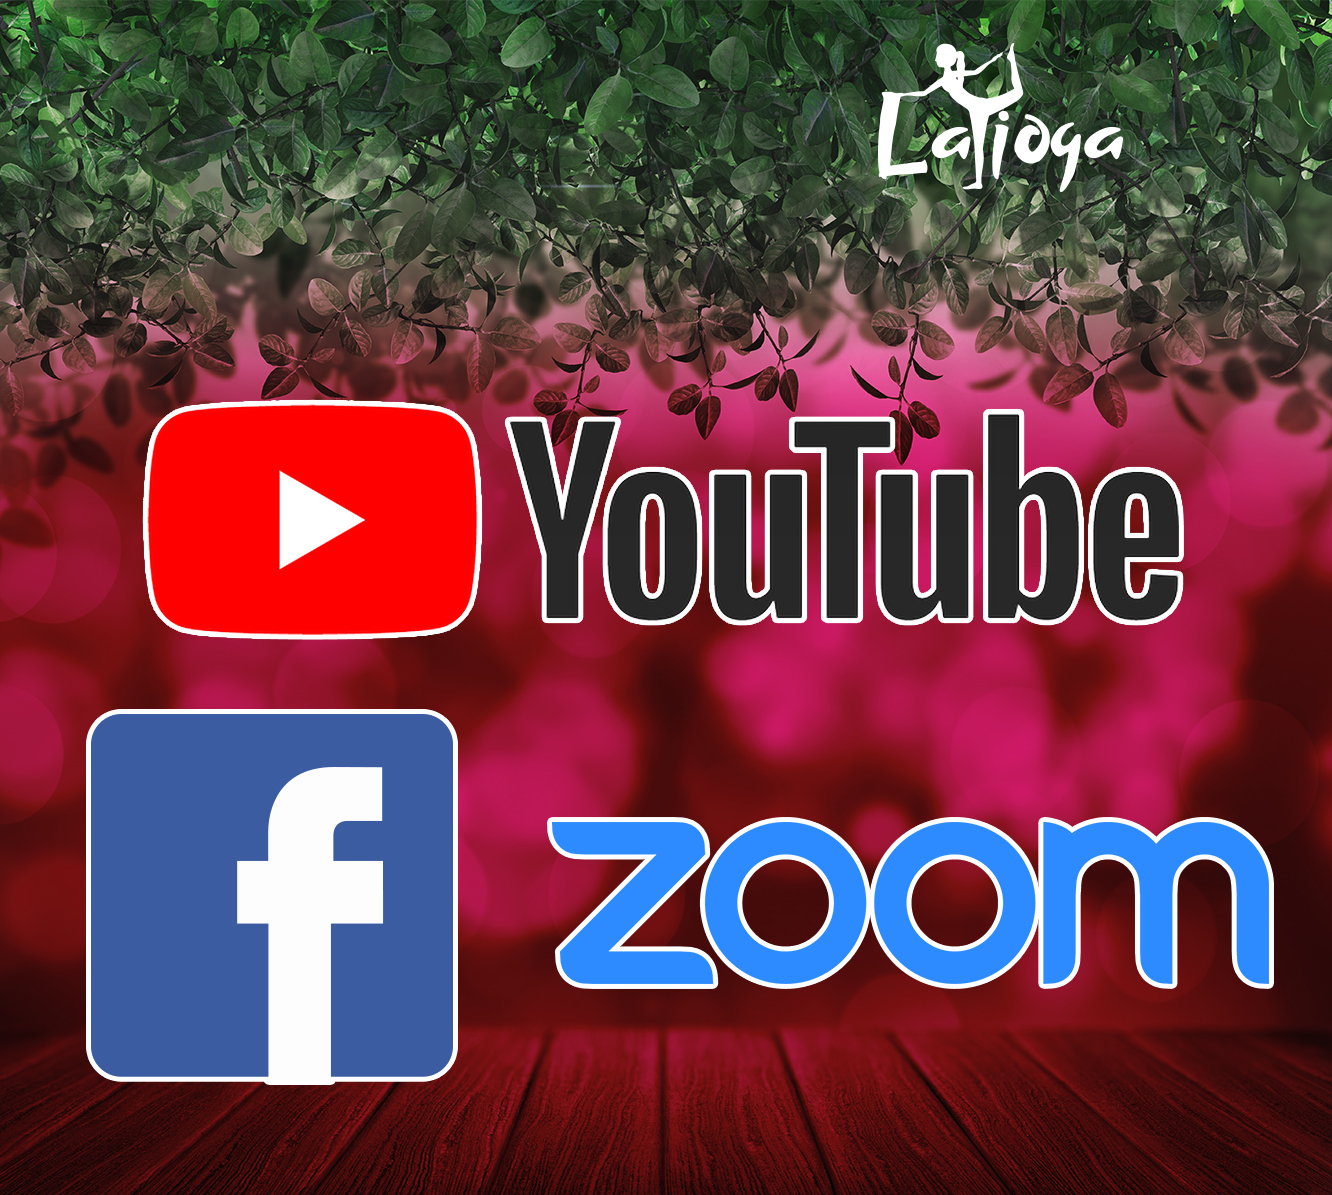 la joga youtube fb zoom 2020